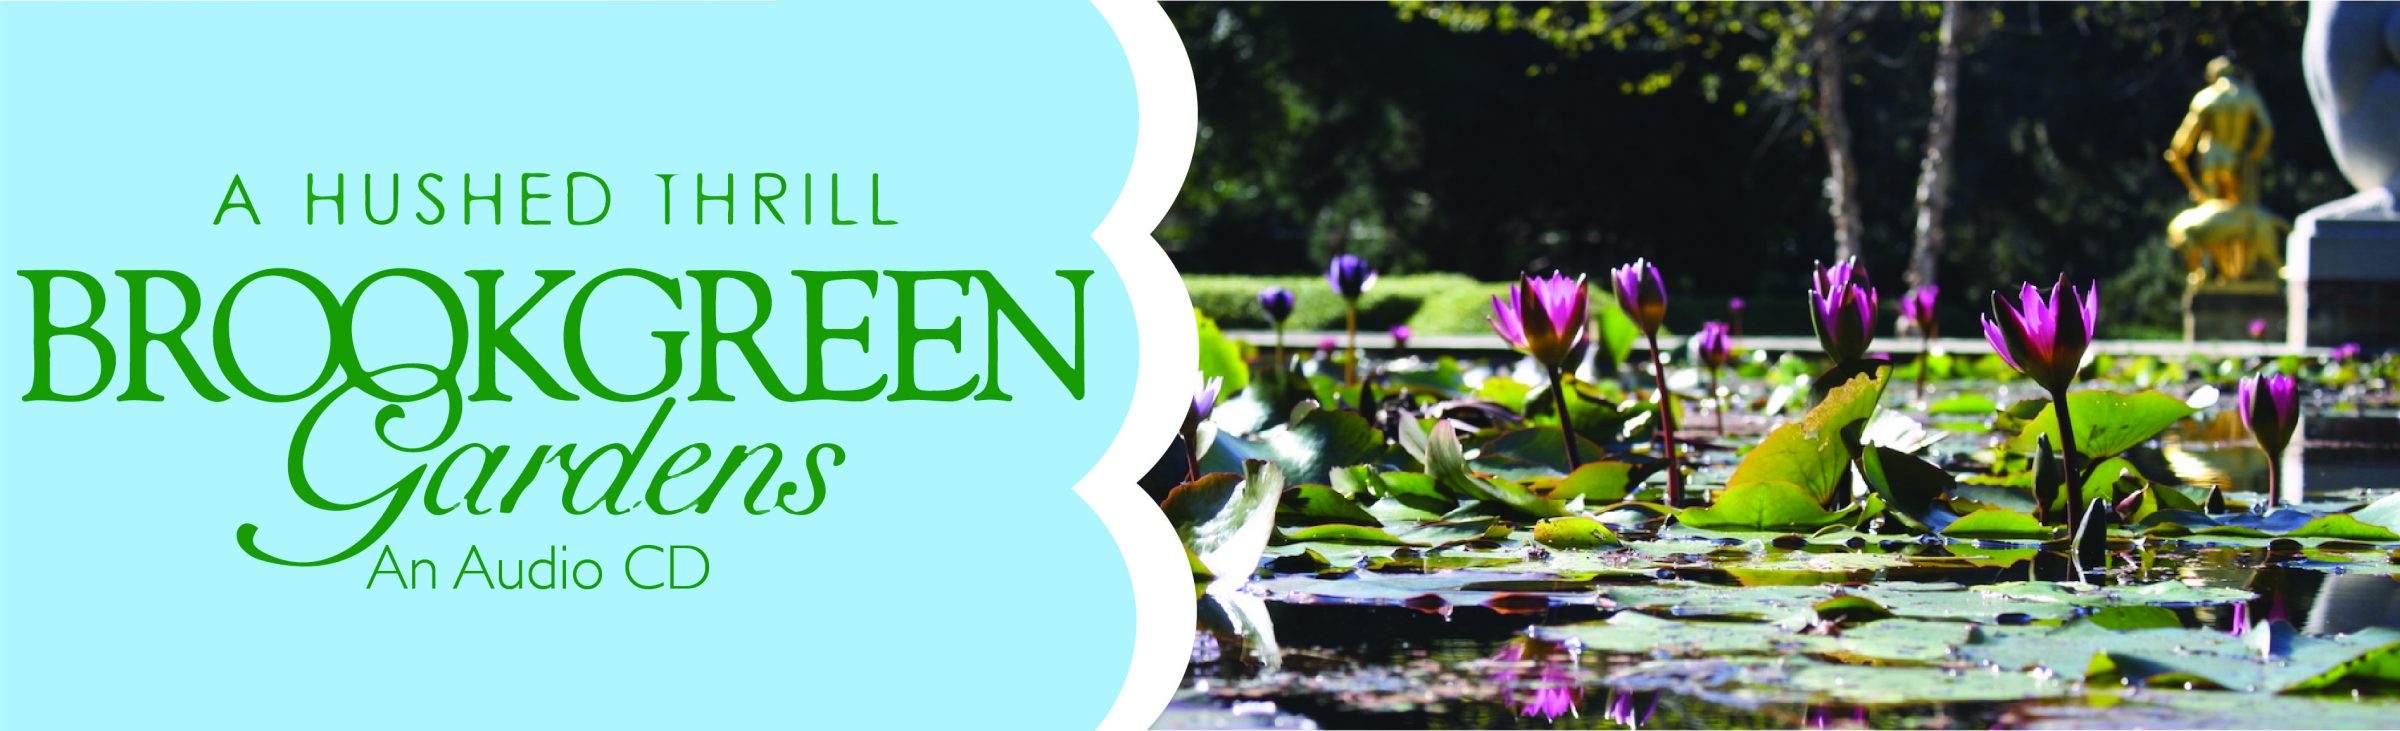 Brookgreen Gardens: A Hushed Thrill